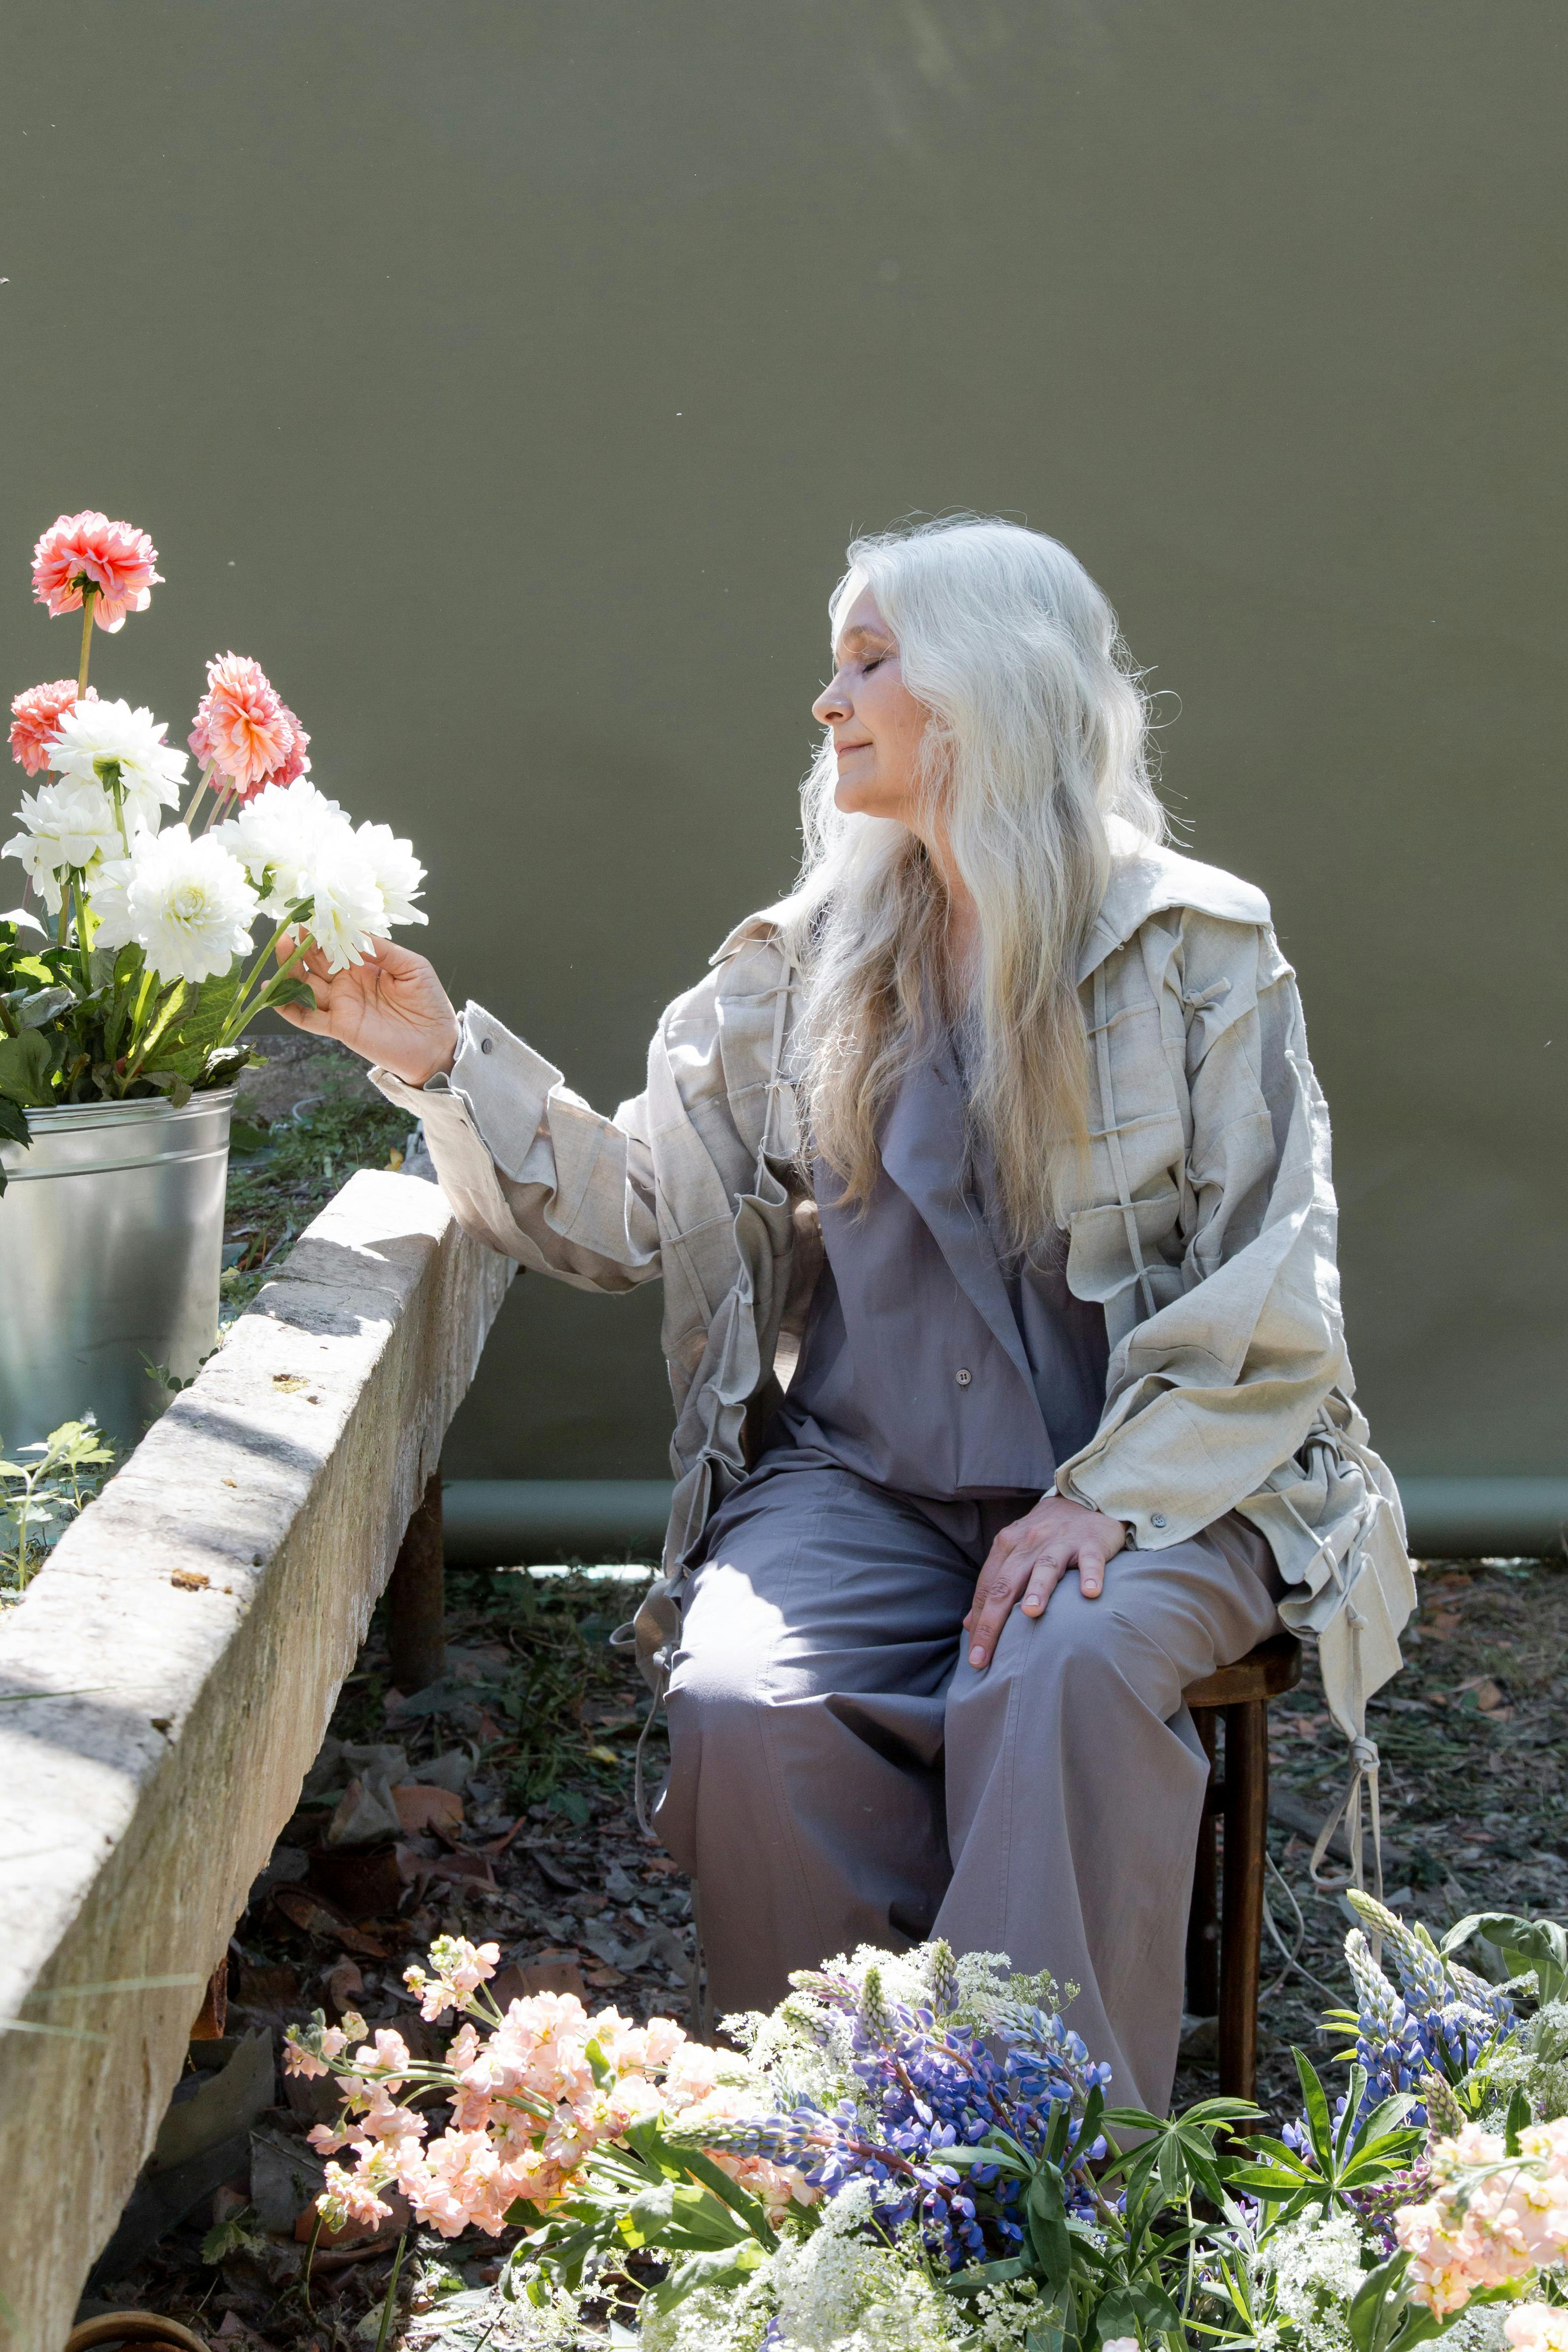 An elderly woman posing with flowers | Source: Pexels